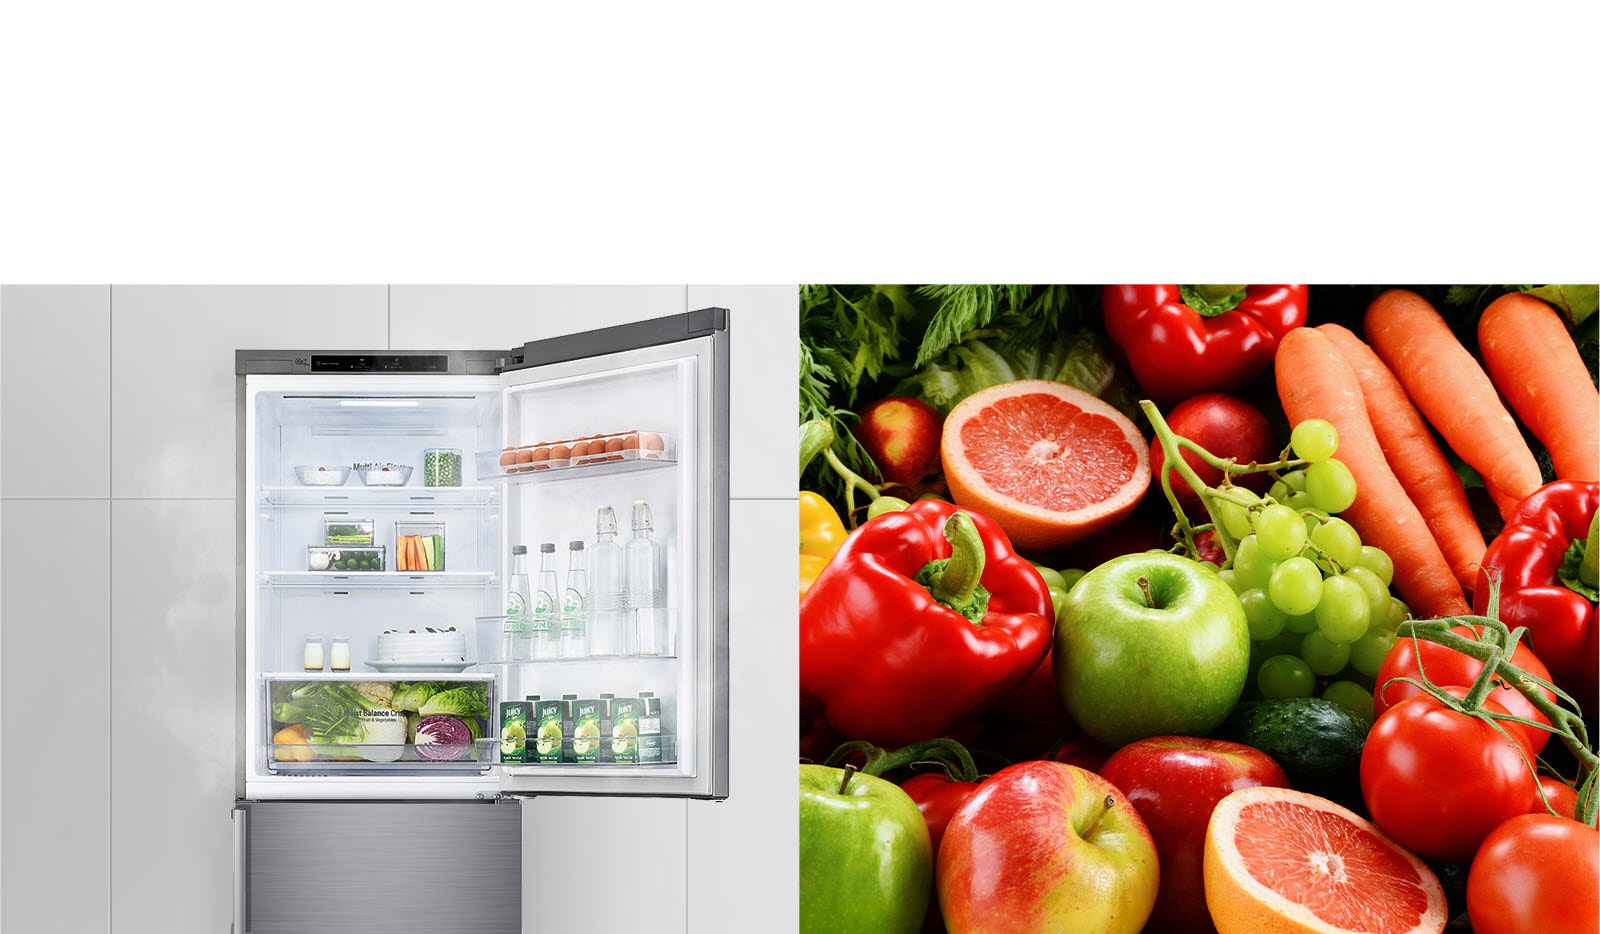 Prva slika prikazuje frižider sa otvorenim gornjim vratima, pun pića i hrane. Druga slika prikazuje prelepo sveže voće i povrće u grupi.